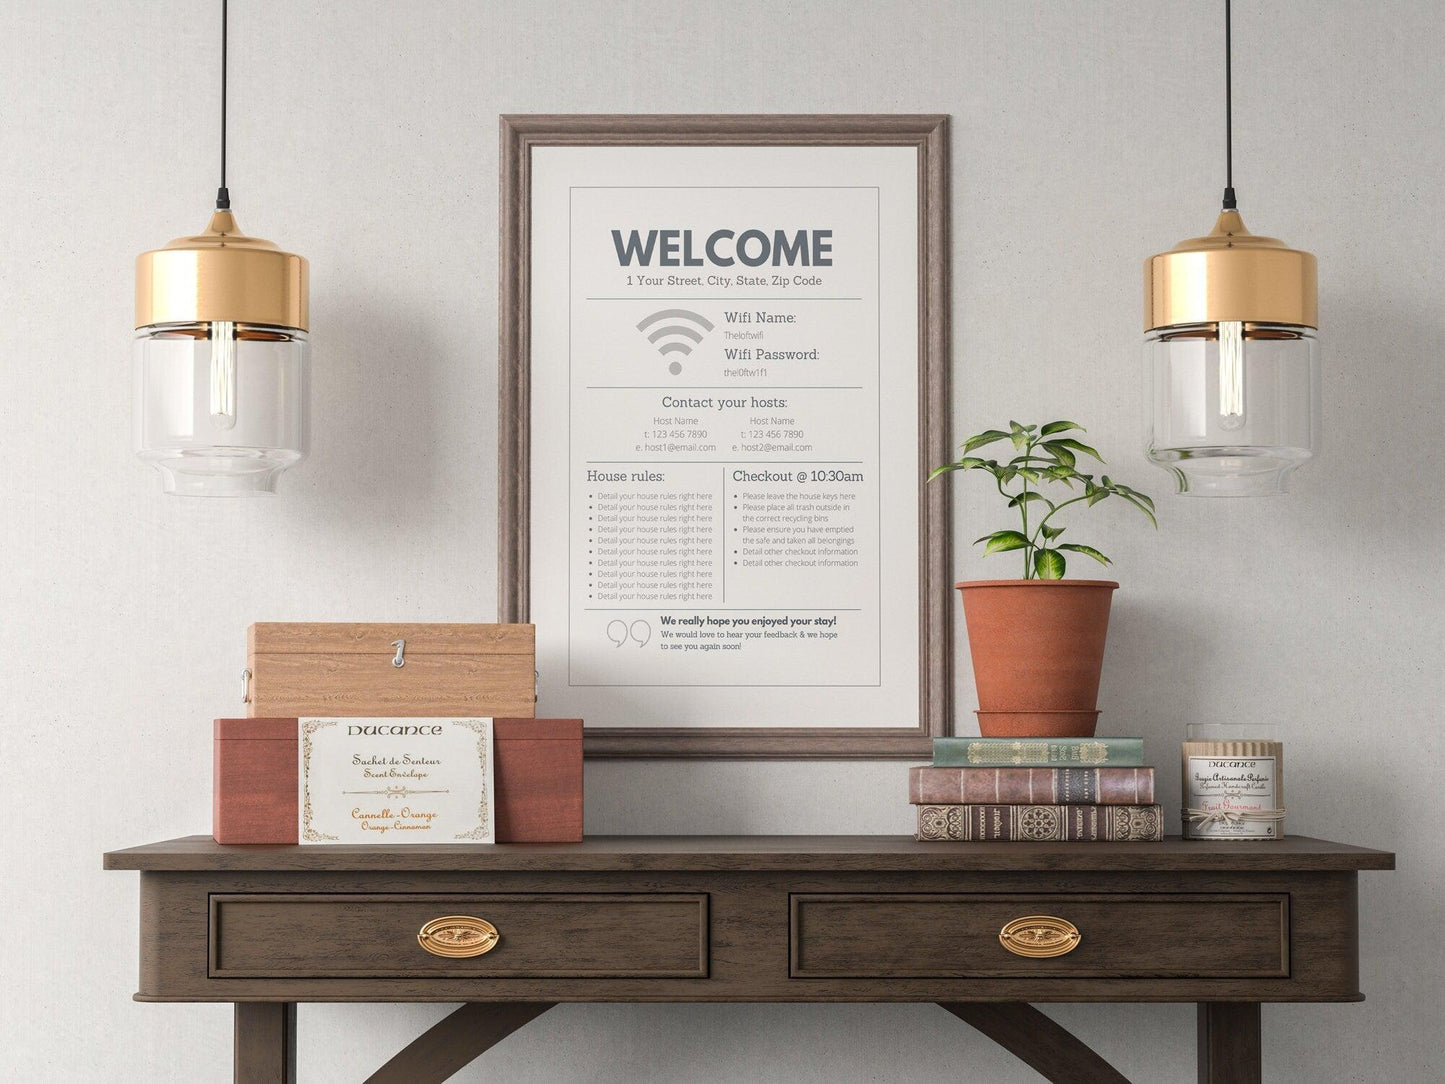 Airbnb Host Posters & Signage Bundle (city)